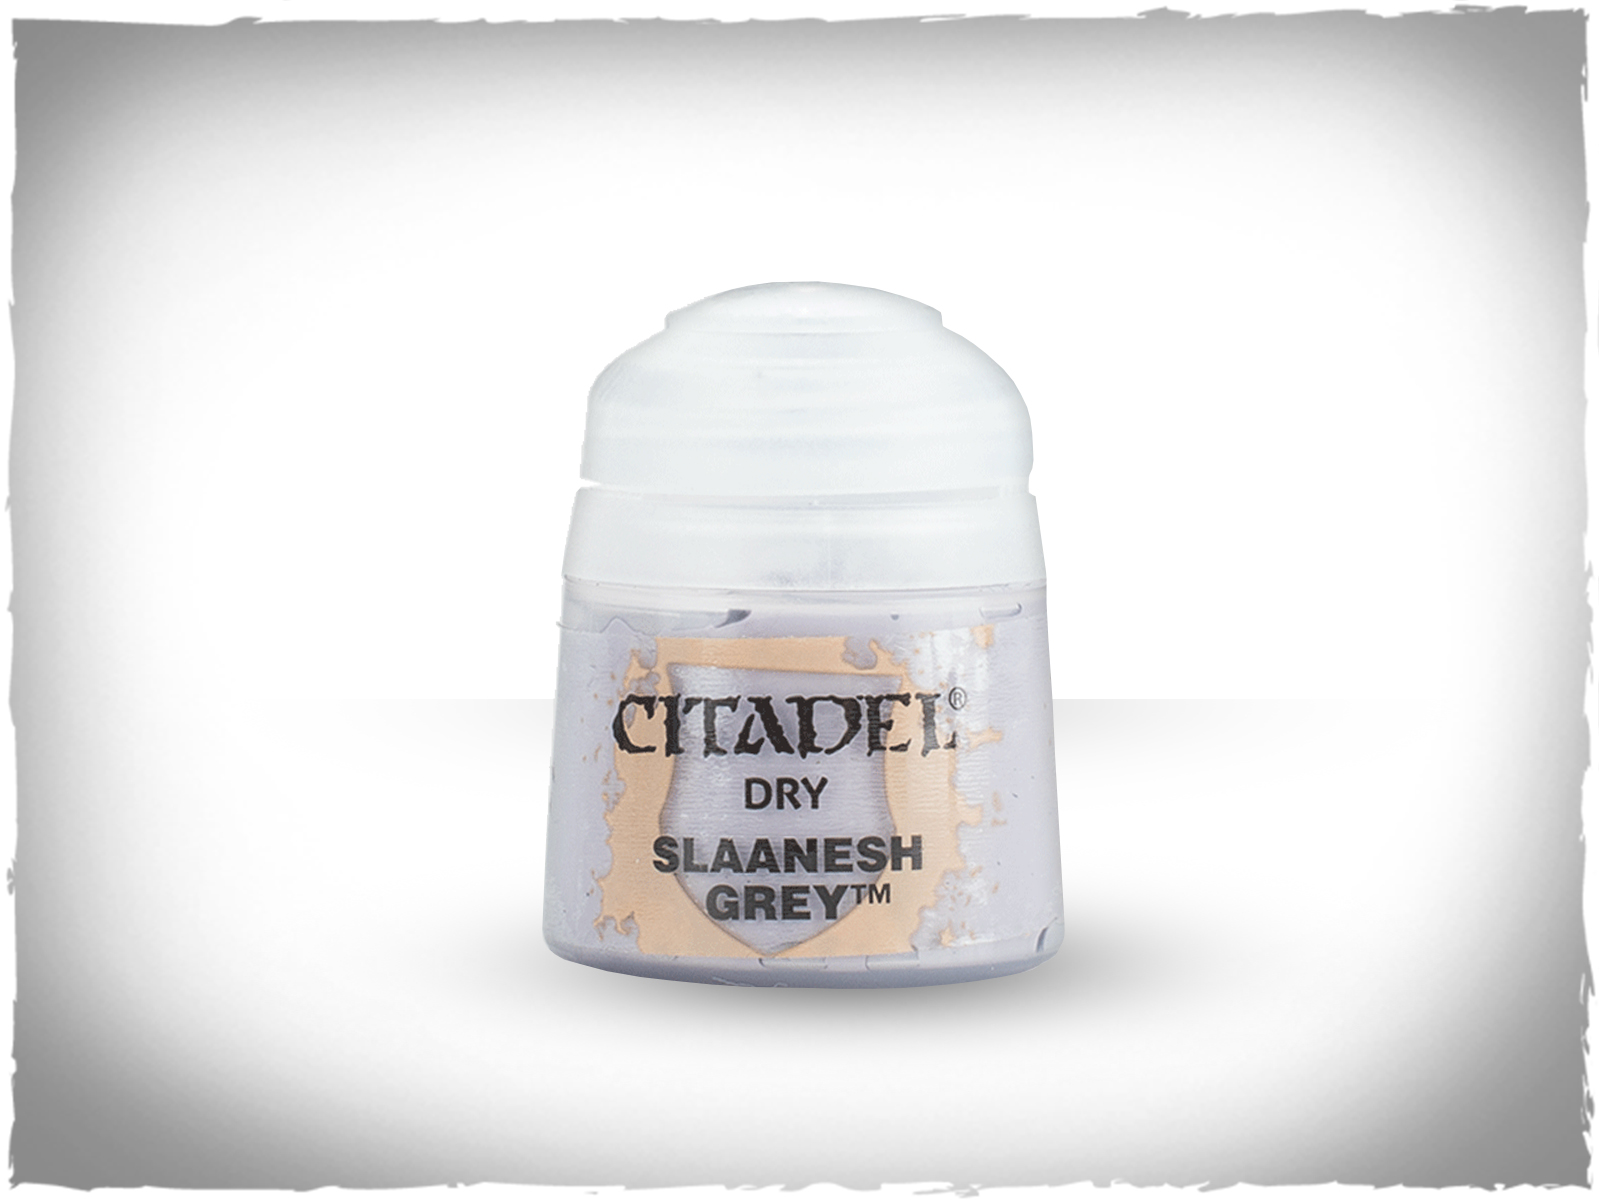 Citadel Dry - 23-31 Slaanesh Grey | DeepCut Studio